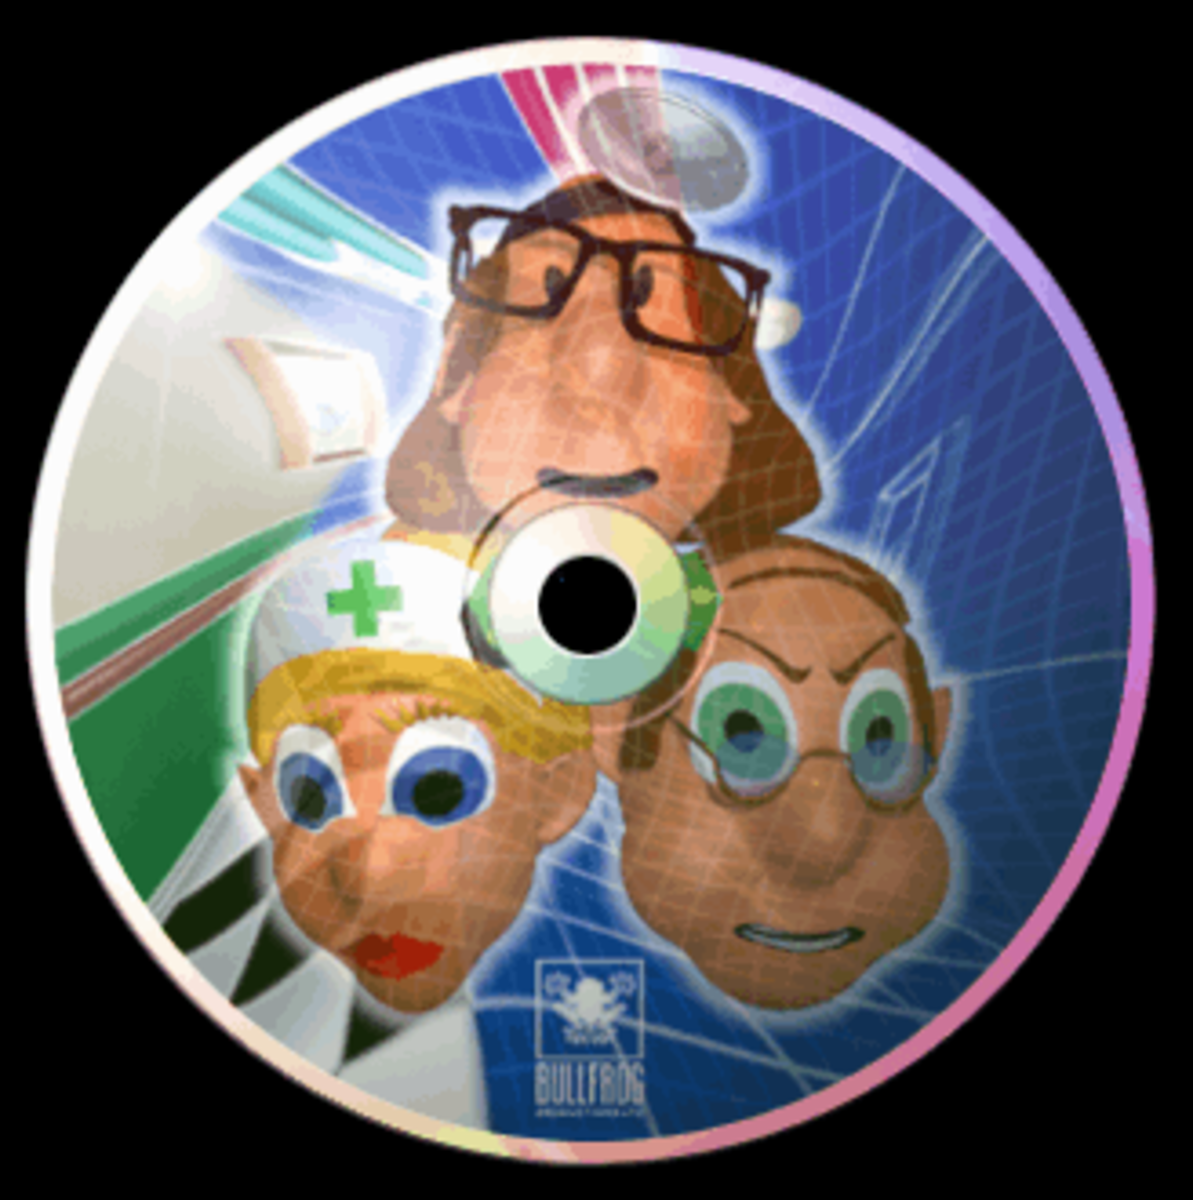 theme hospital game cd 